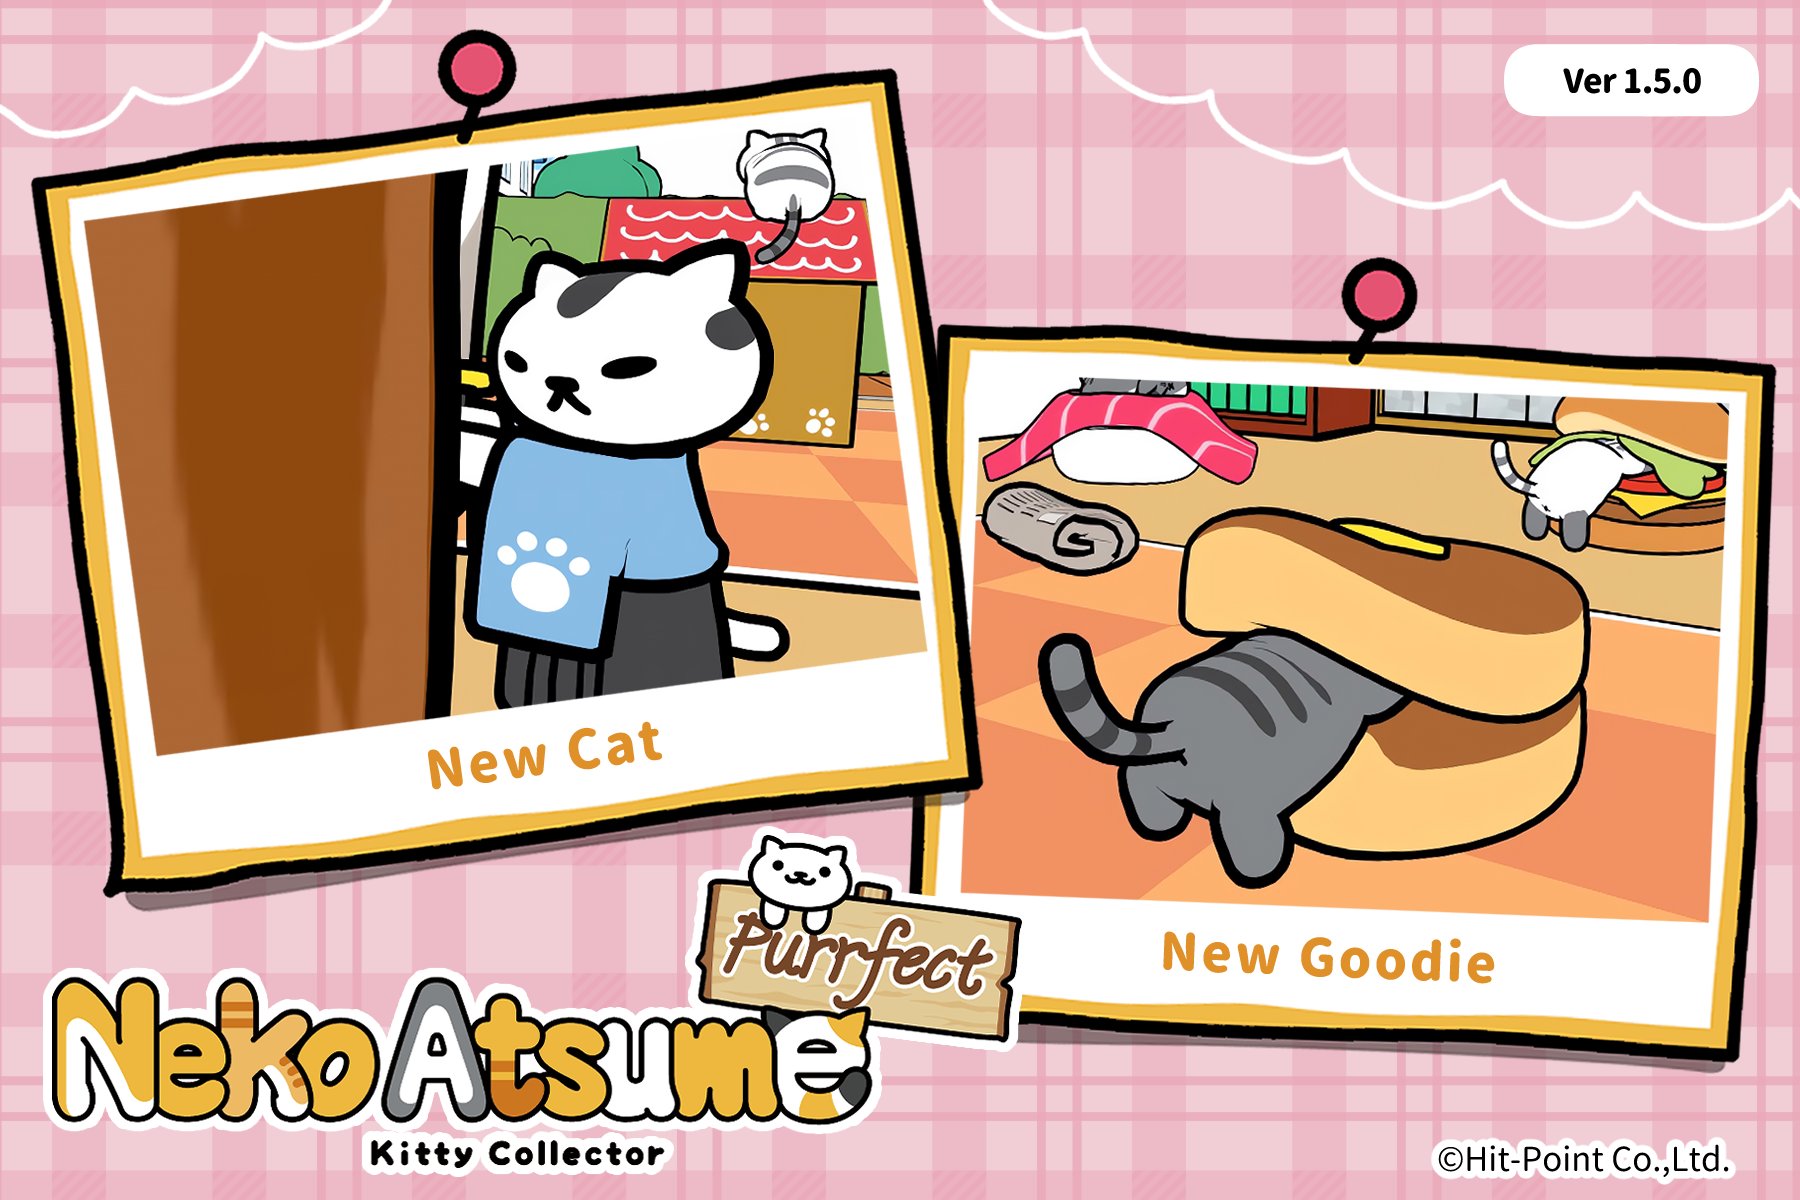 Neko Atsume Purrfect: Kitty Collector update 1.5.0